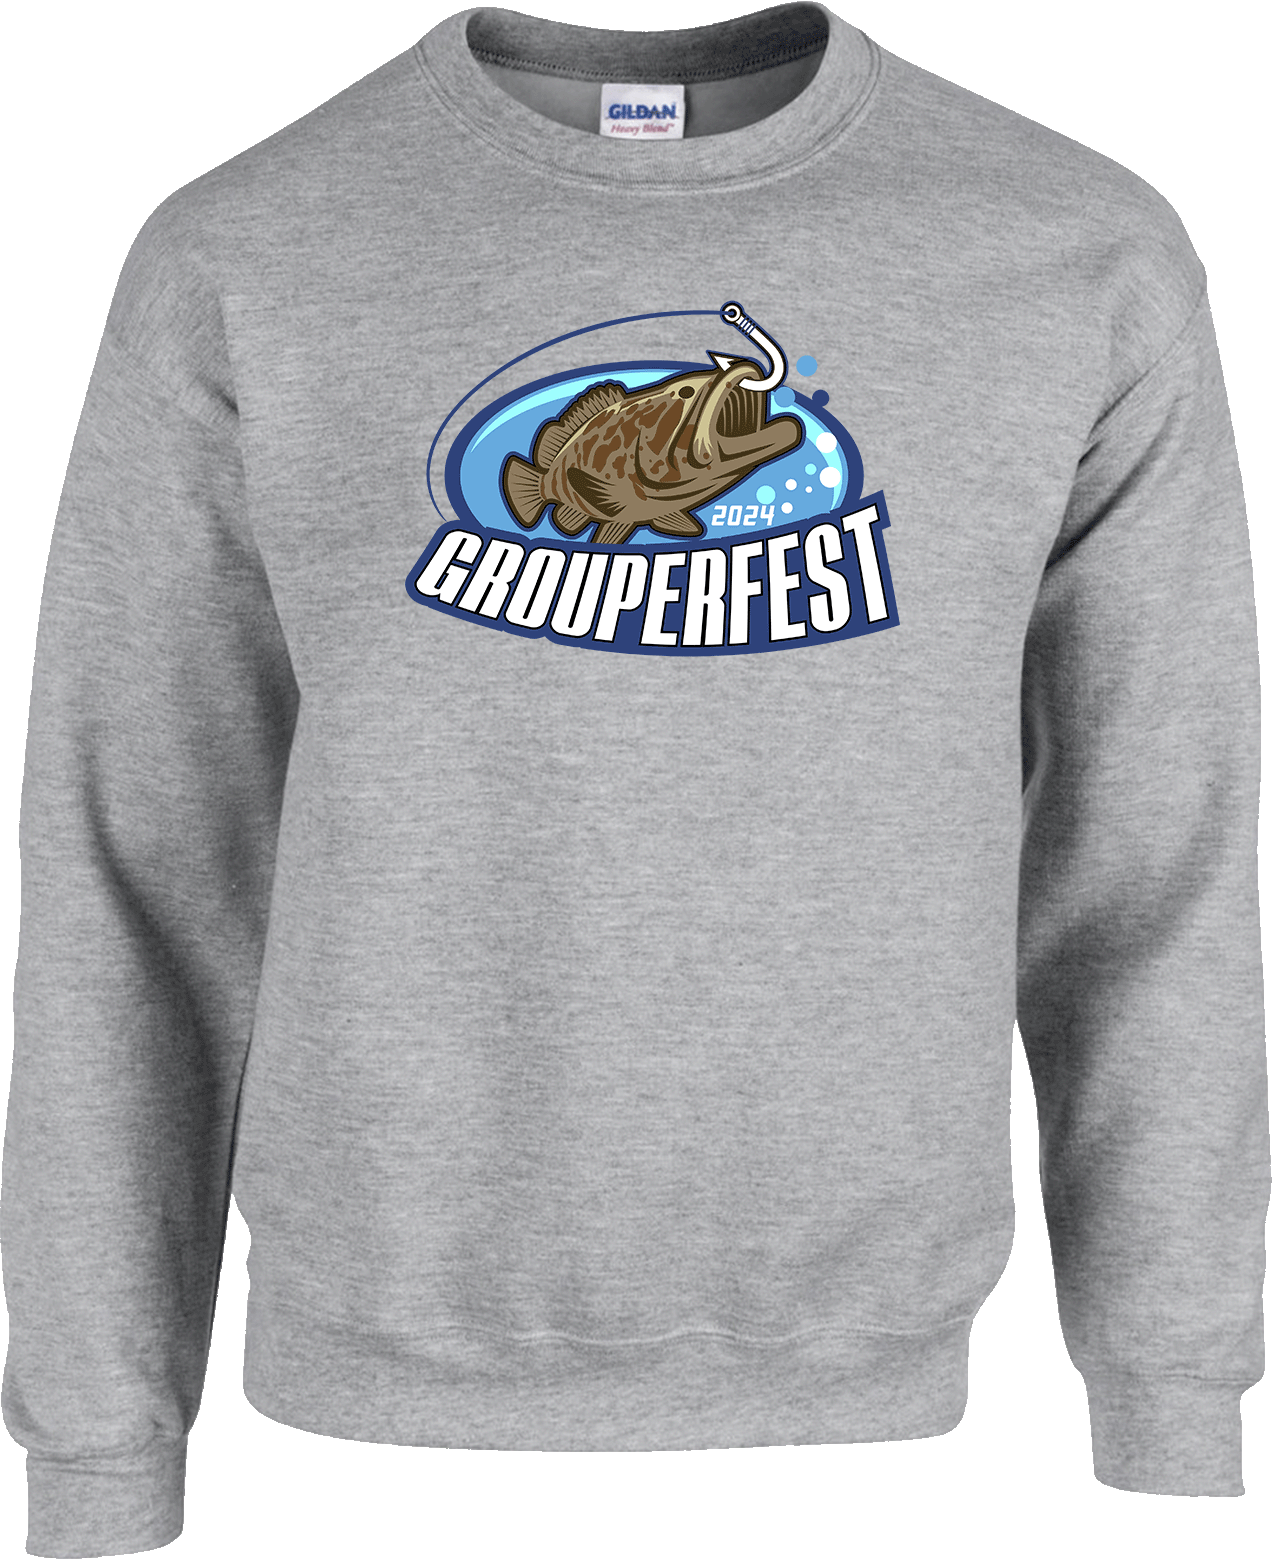 Crew Sweatershirt - 2024 Grouperfest